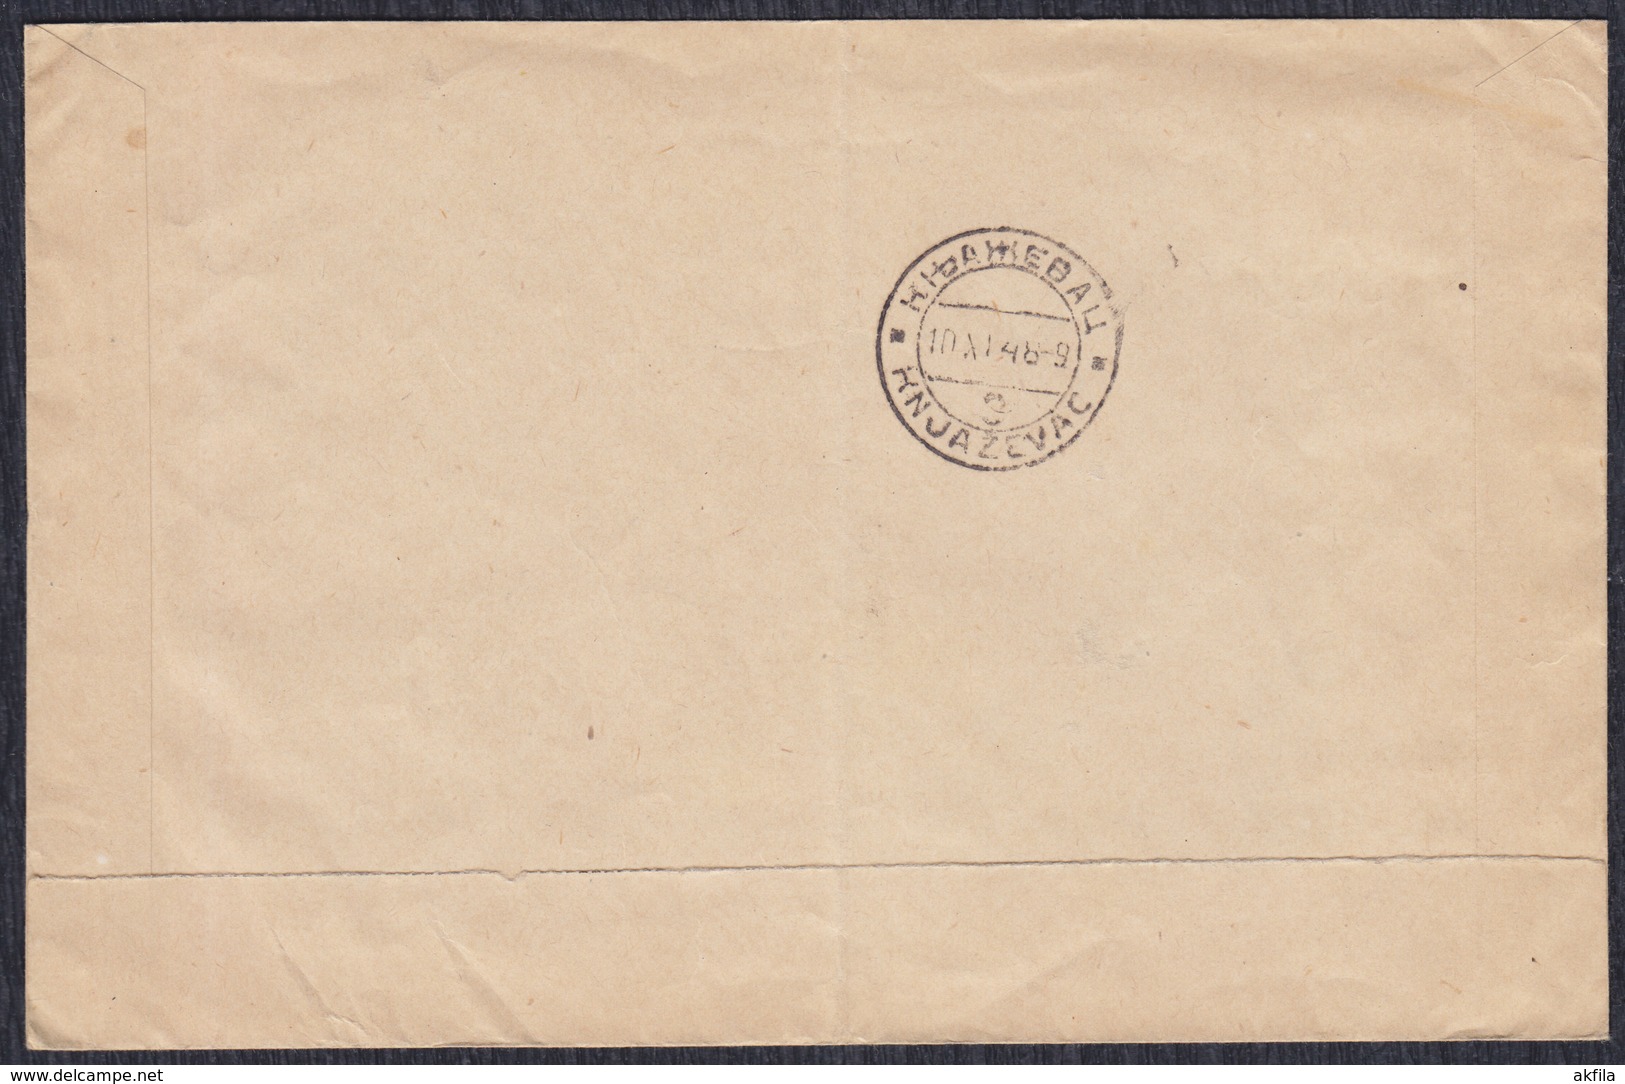 Yugoslavia 1948 Official Letter Franked With Definitive And Official Stamps, Sent From Svrljig To Knjazevac - Briefe U. Dokumente